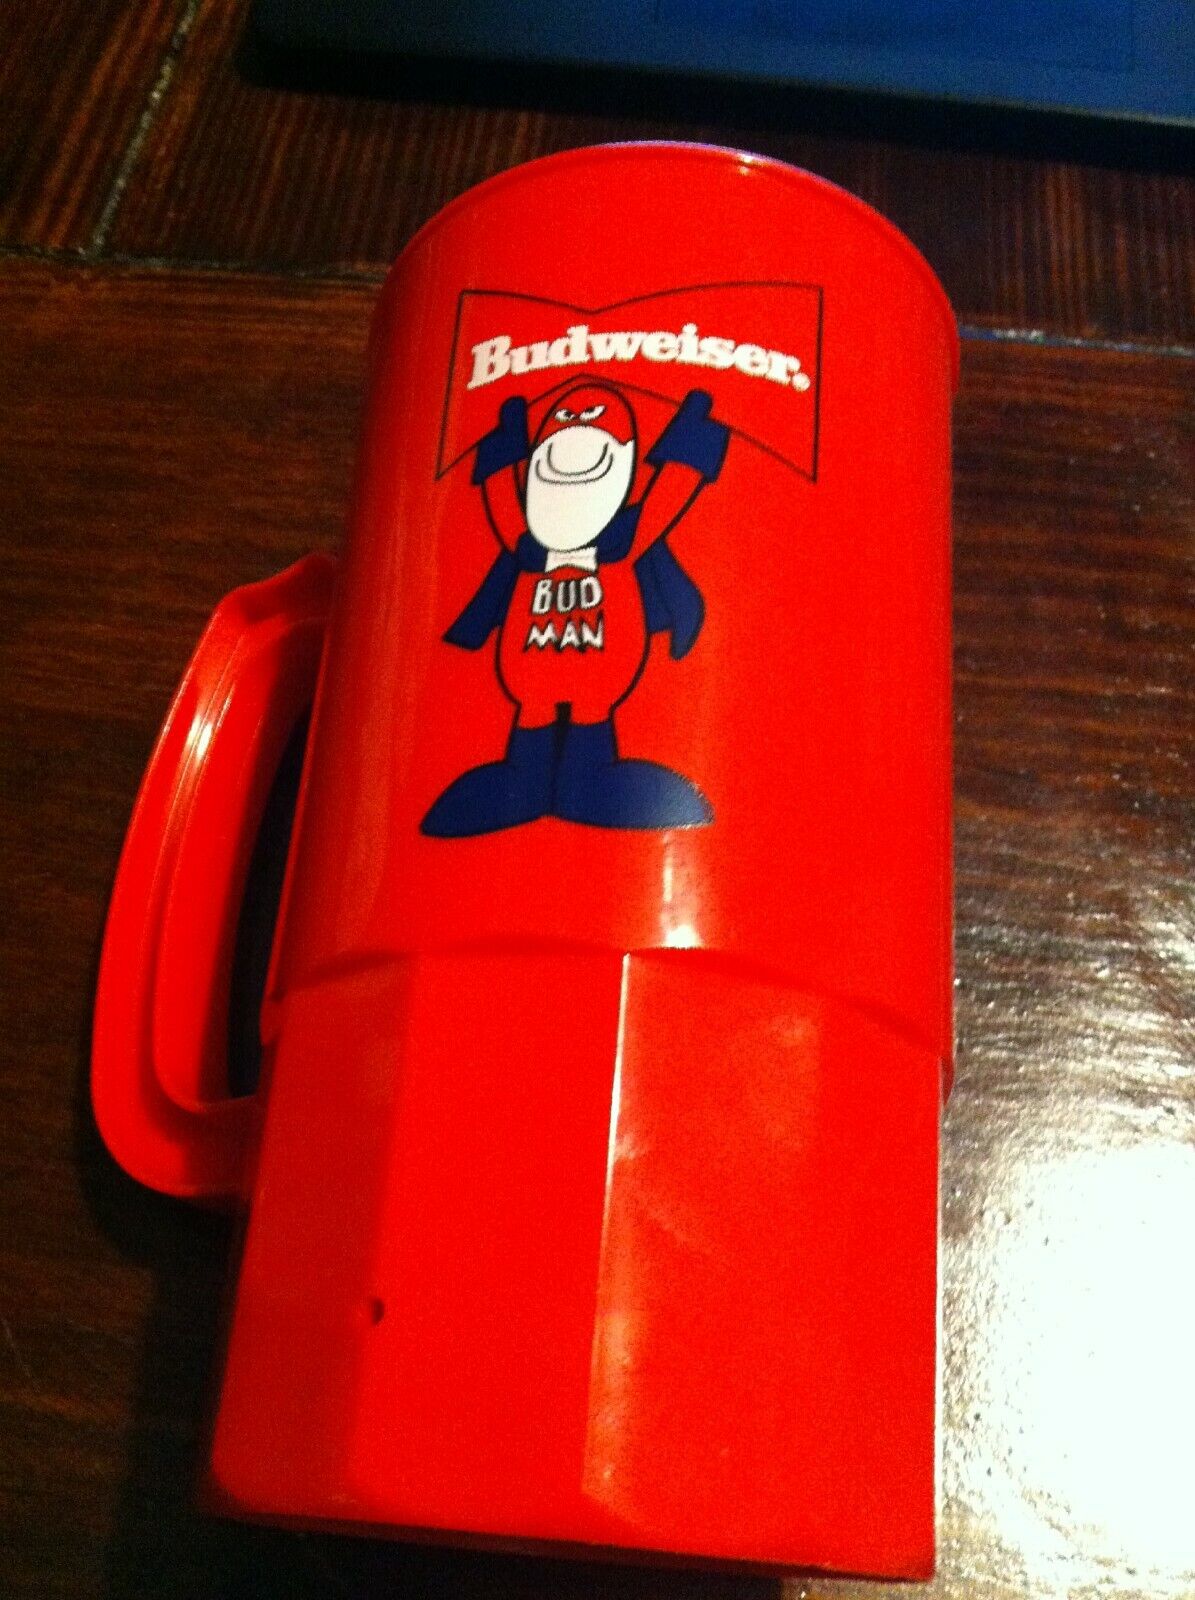 Budweiser Bud Man Red Plastic Cup /Brand New 32 oz.Buy Three Get One Free